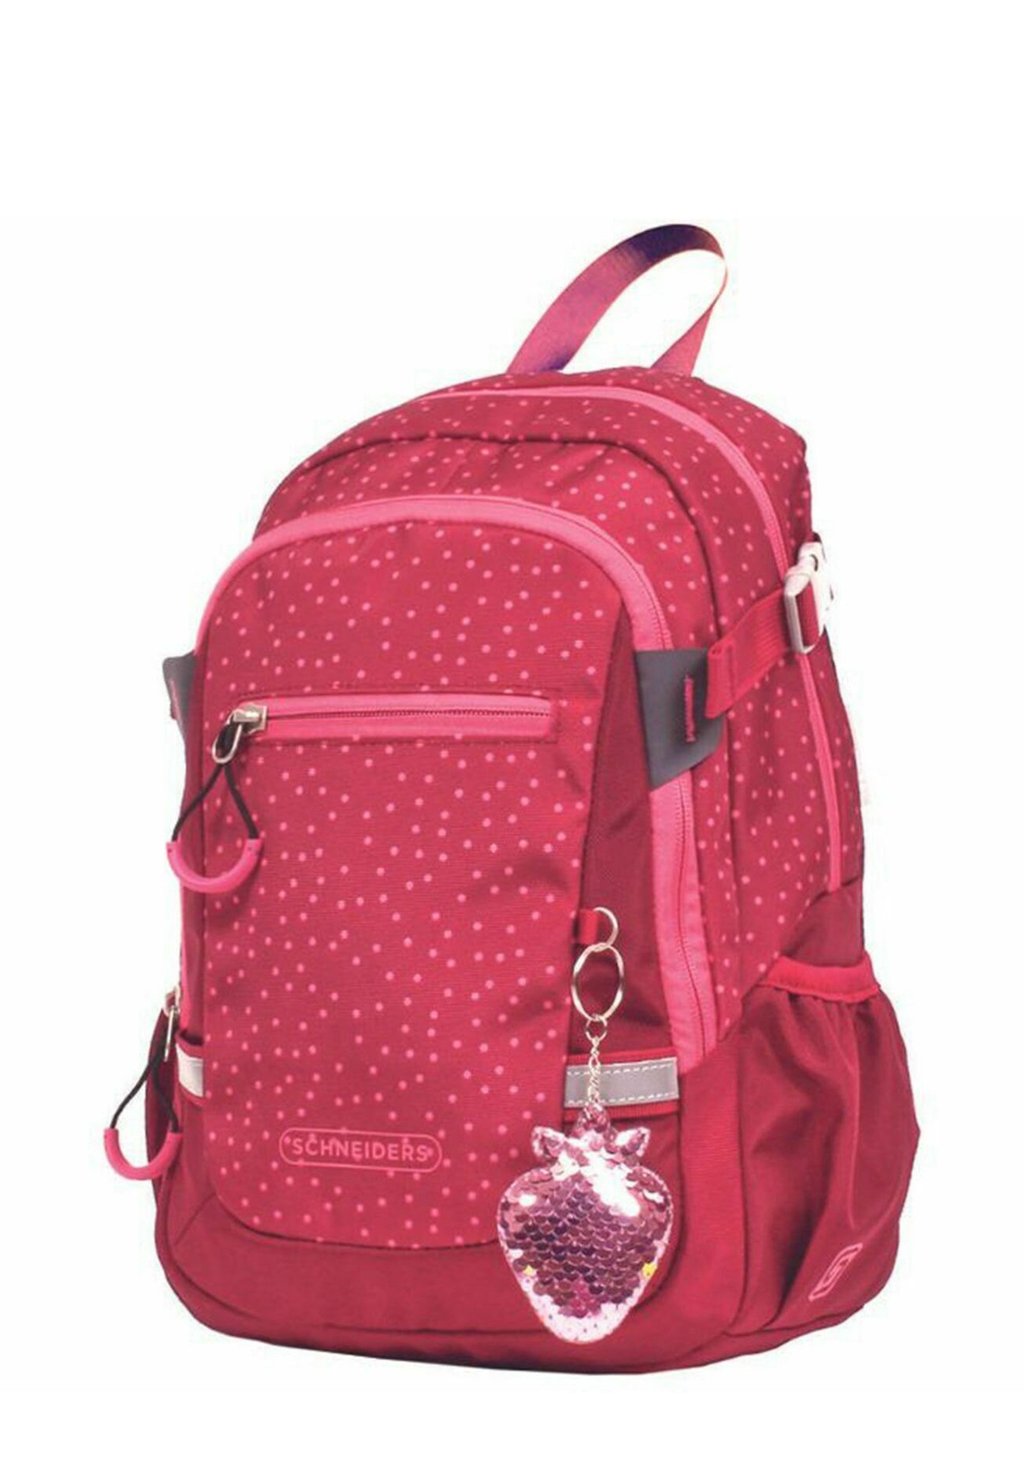 Школьная сумка GARTEN 35 CM Schneiders, цвет very berry